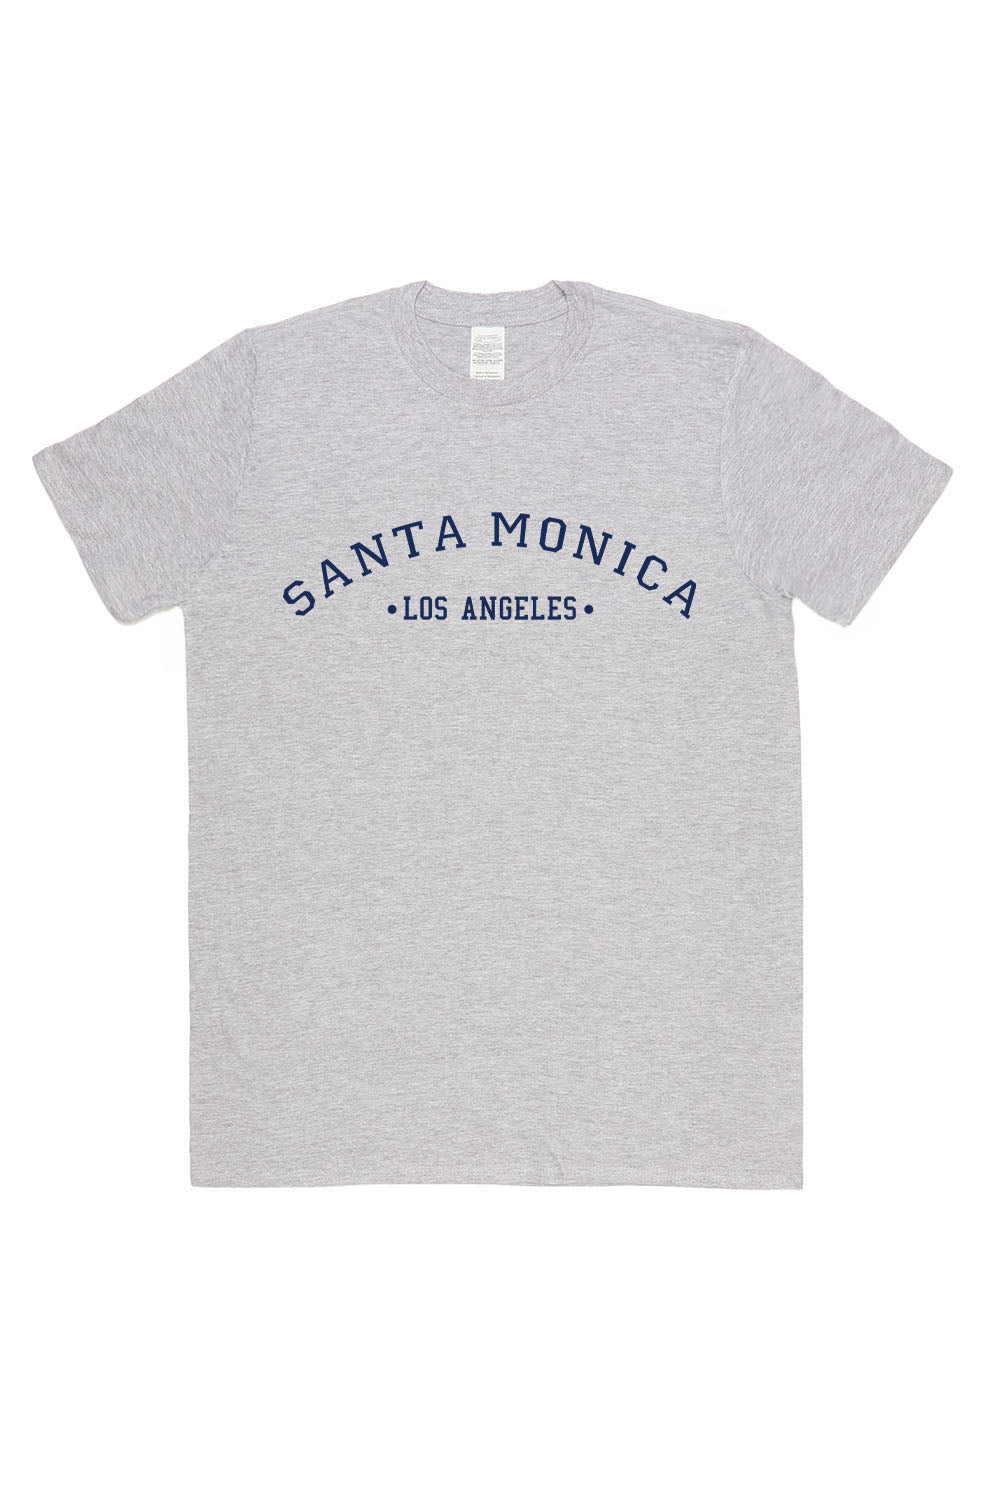 Santa Monica T-Shirt in Ash Grey (Custom Packs)